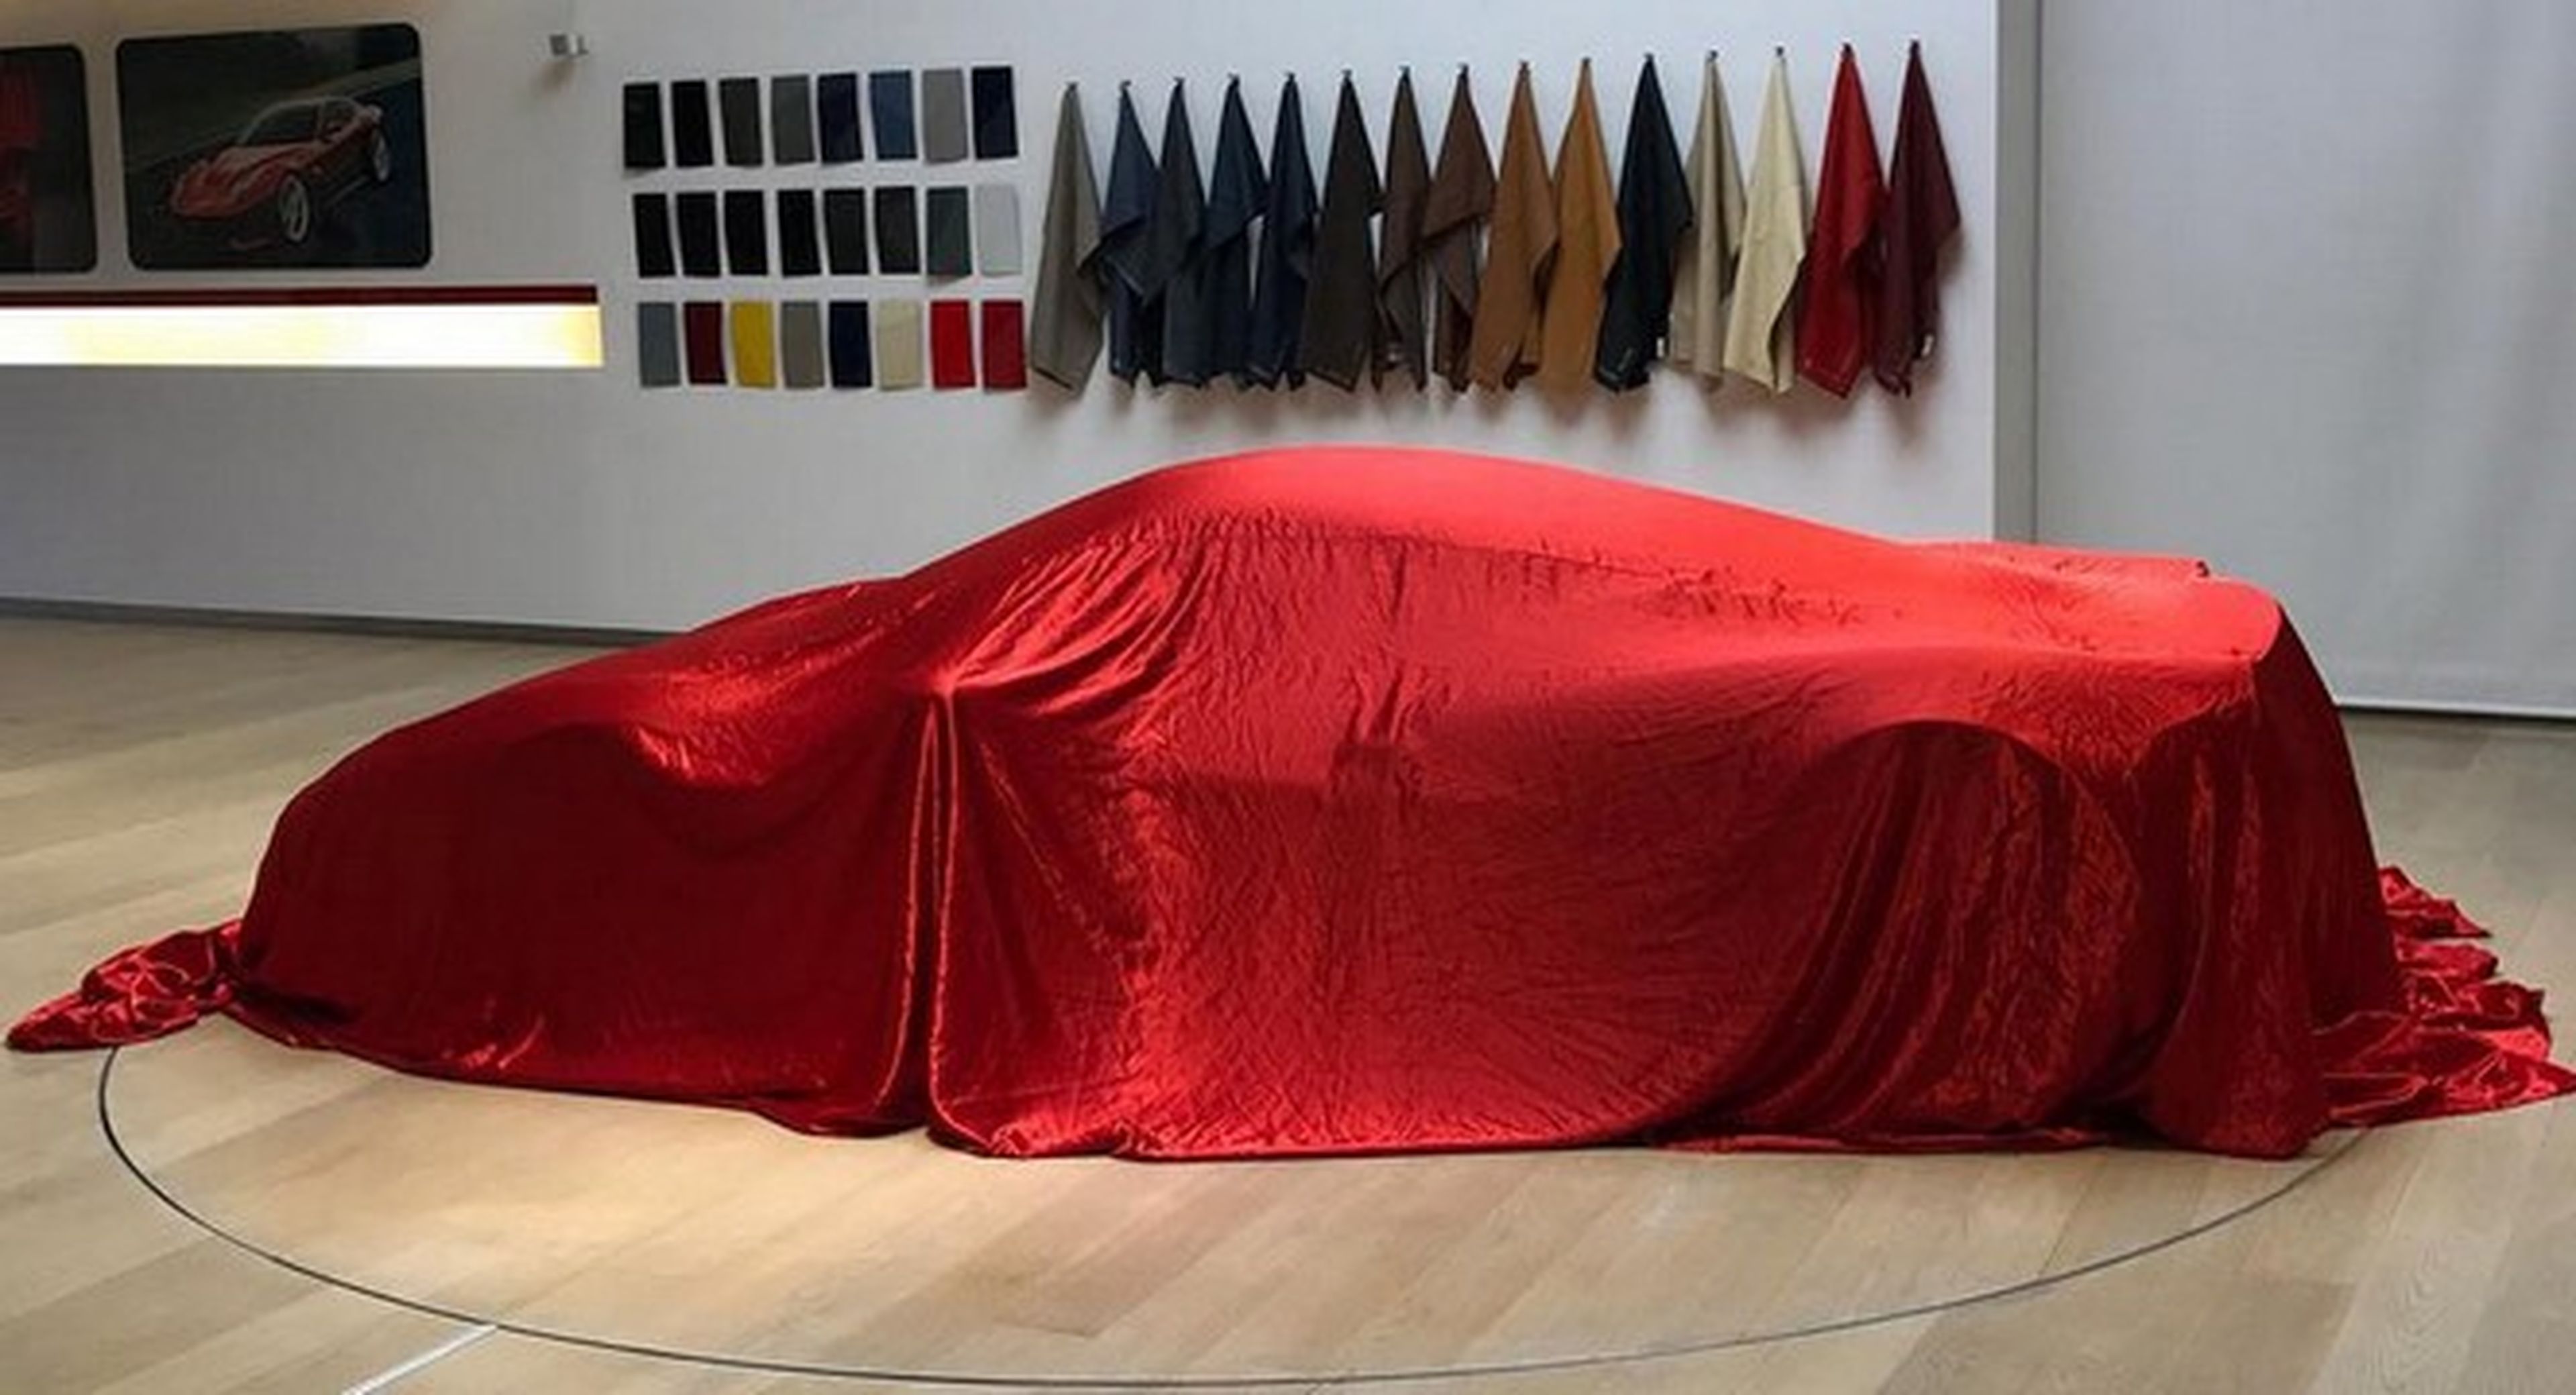 ¿Qué misterioso Ferrari se esconde tras esta cubierta roja?